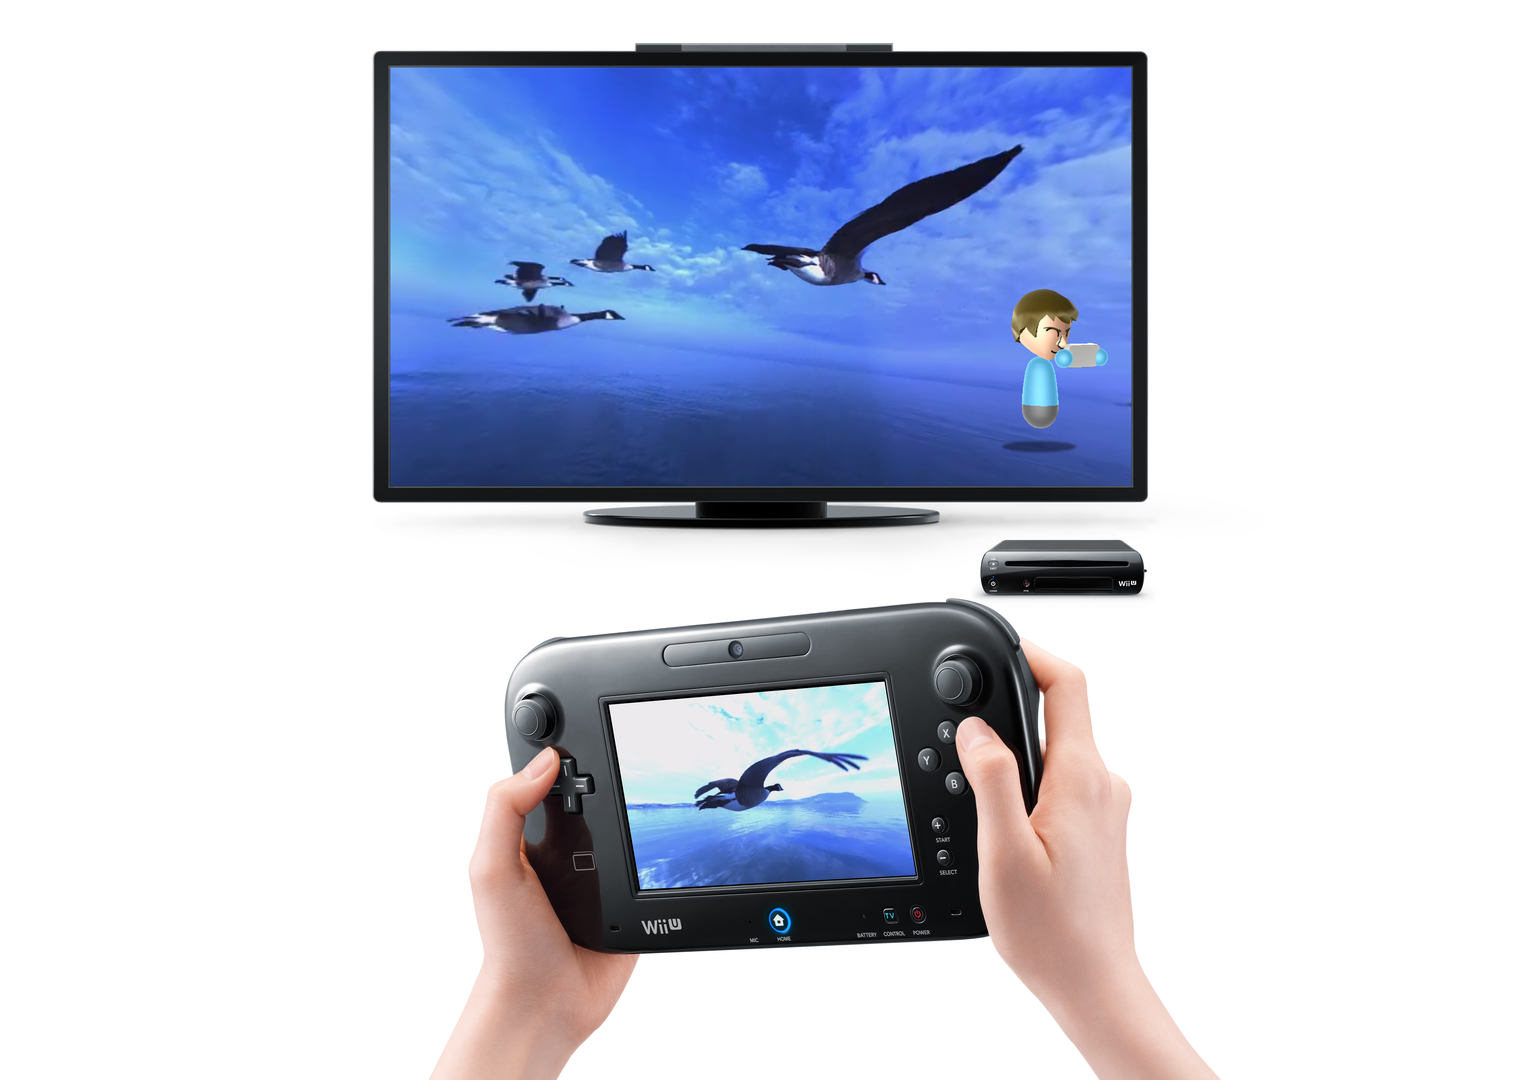 Wii U Panorama-View